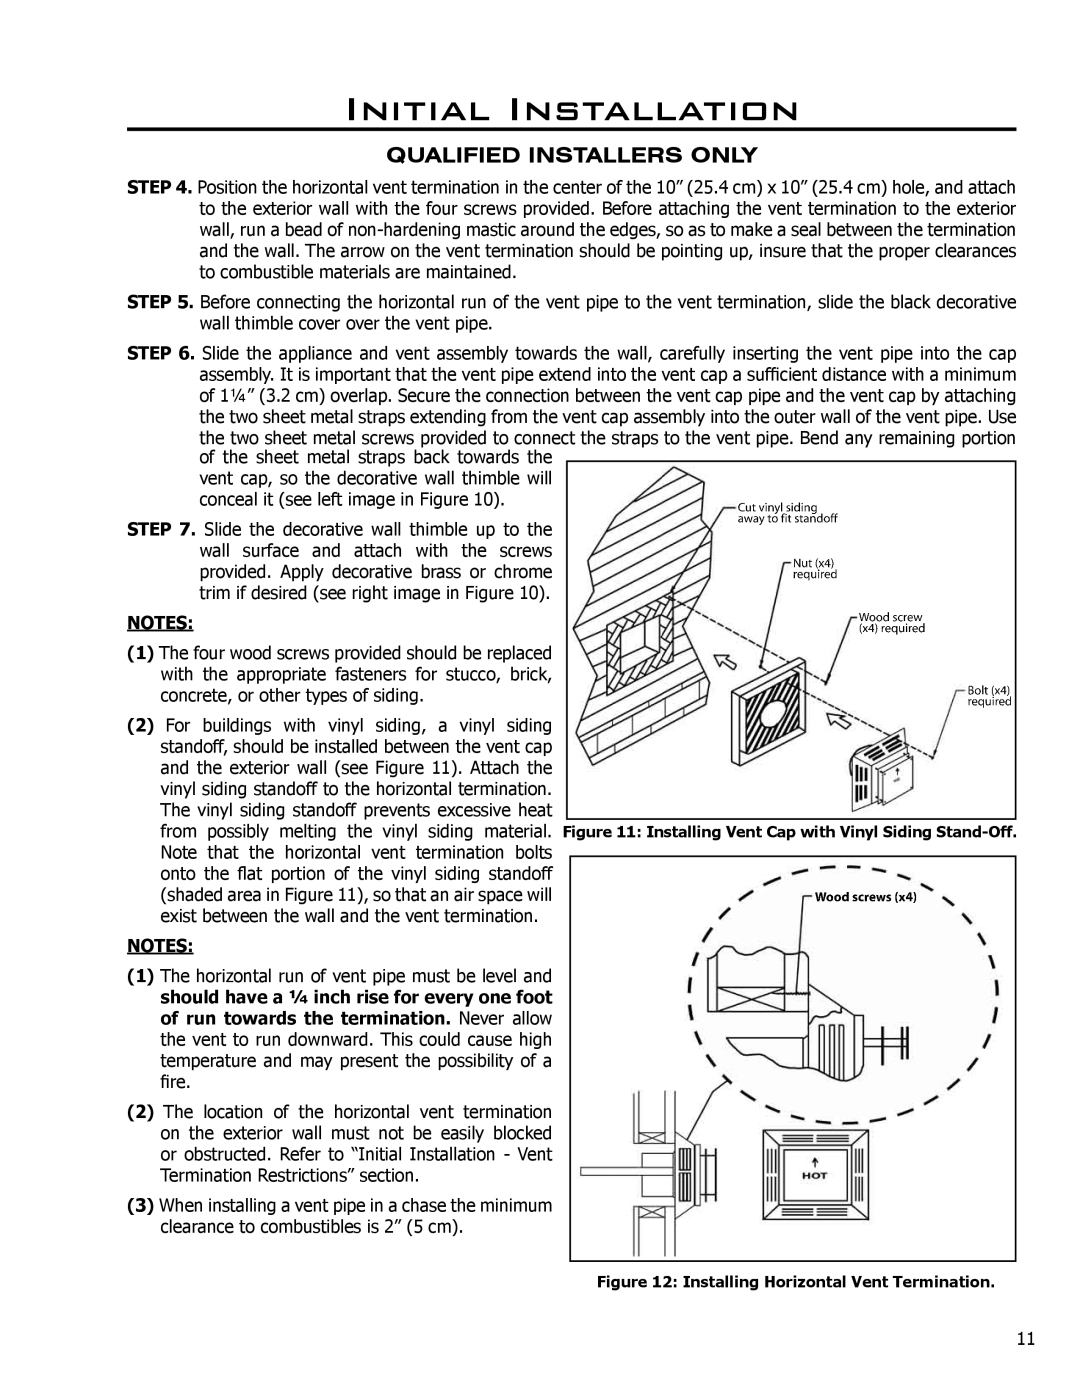 Enviro C-10450 owner manual Installing Horizontal Vent Termination 